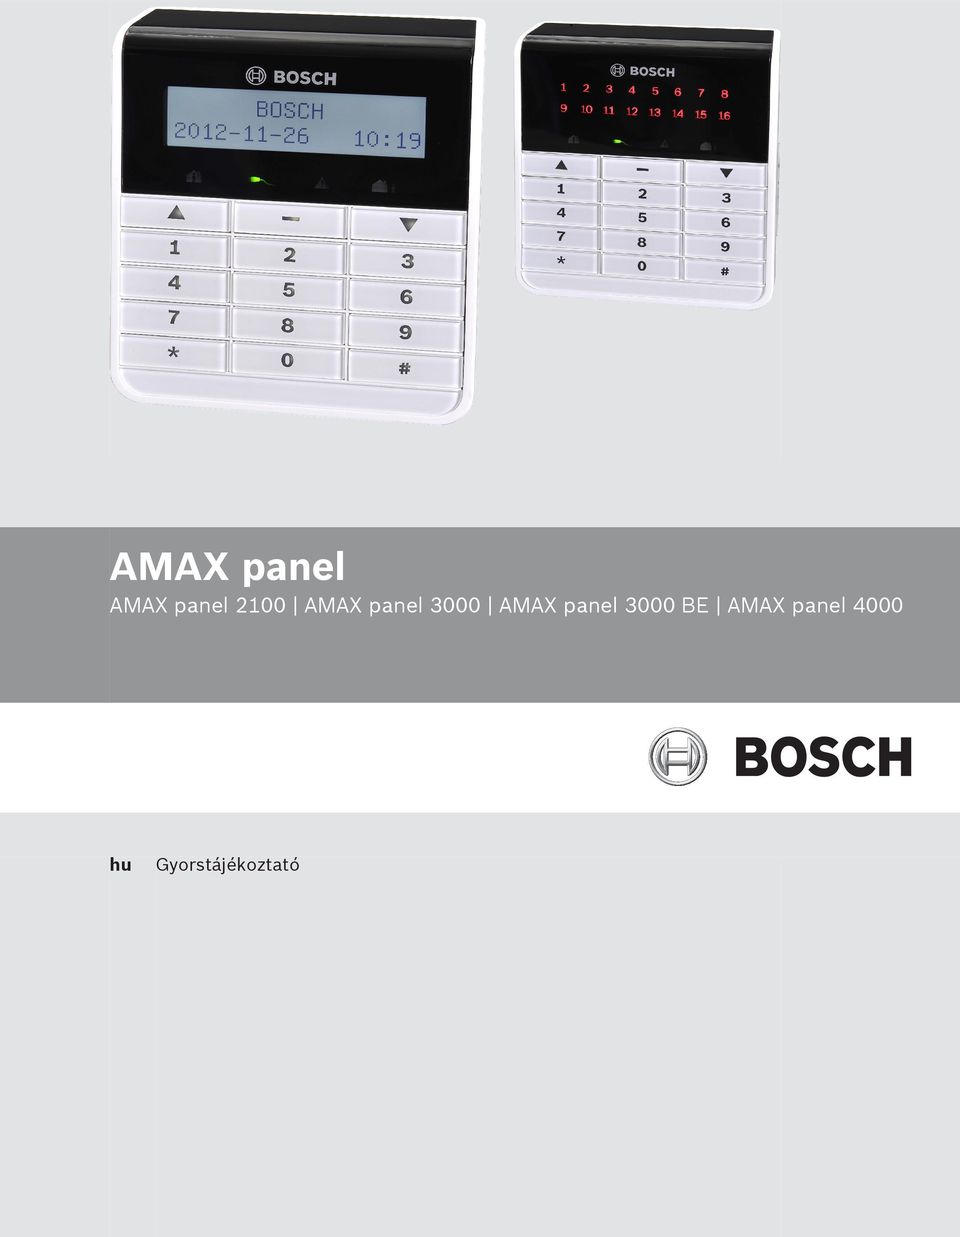 AMAX panel 3000 BE AMAX